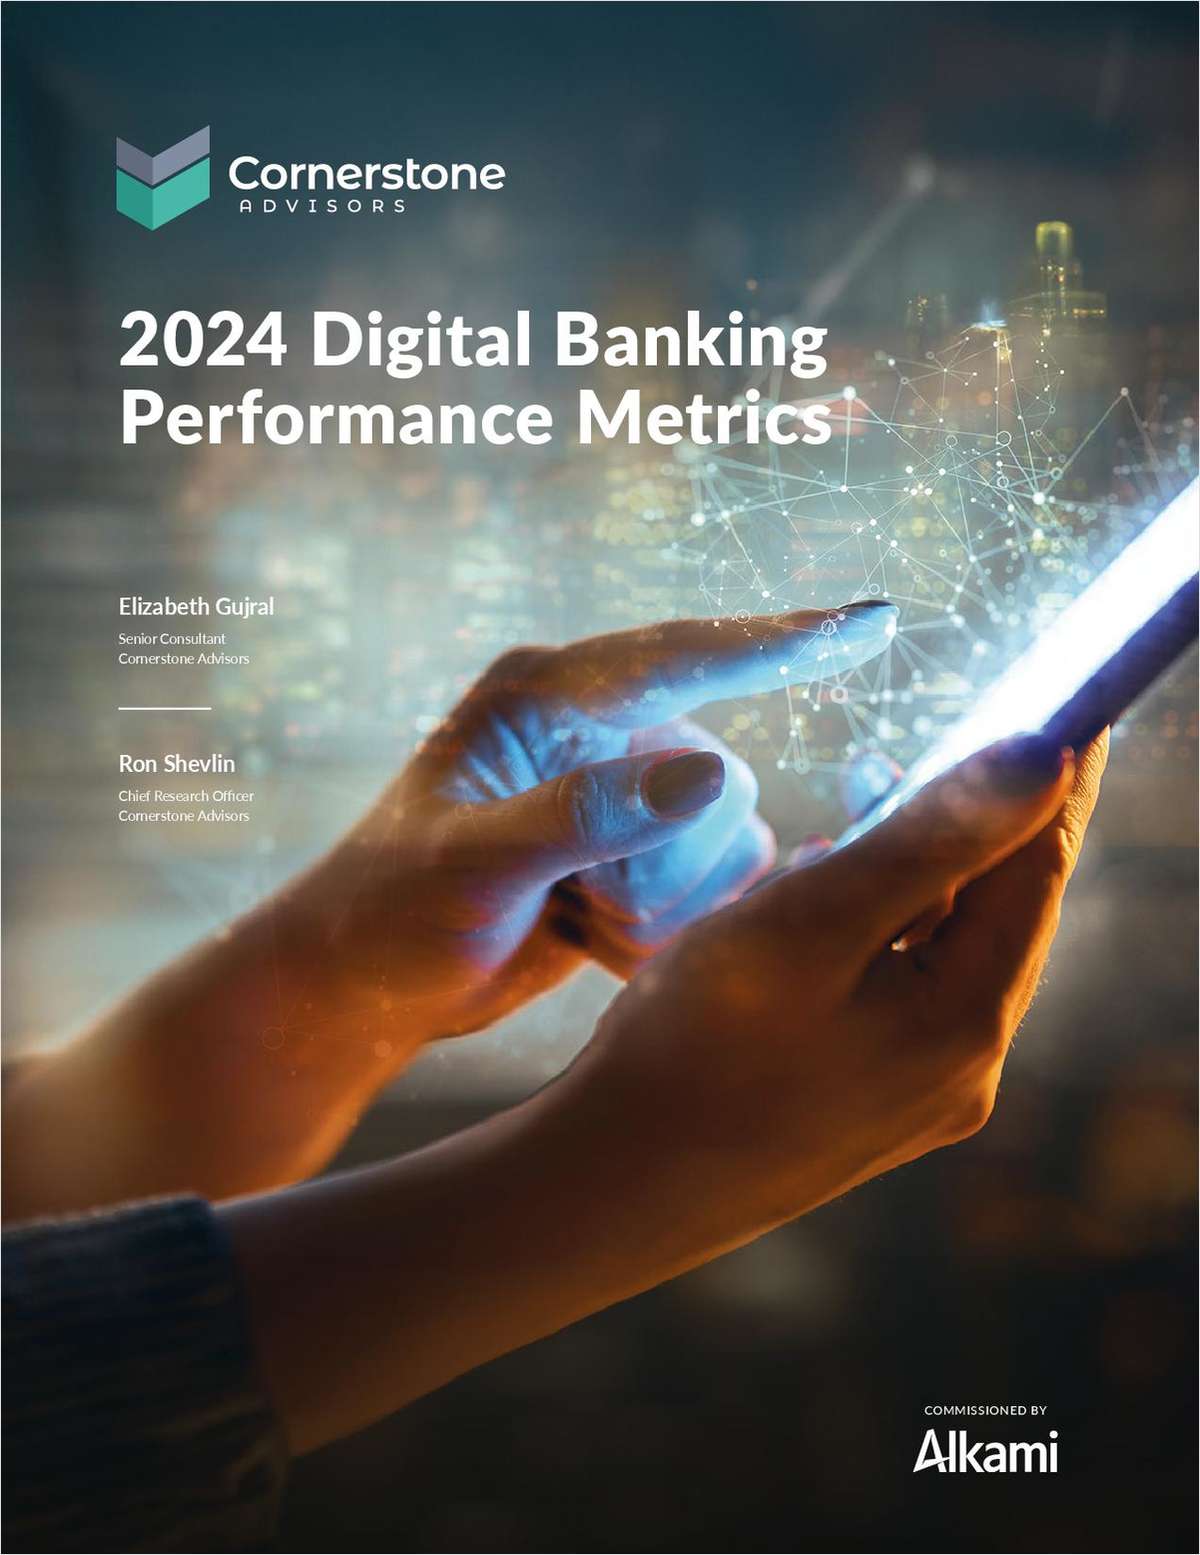 2024 Digital Banking Performance Metrics Report link